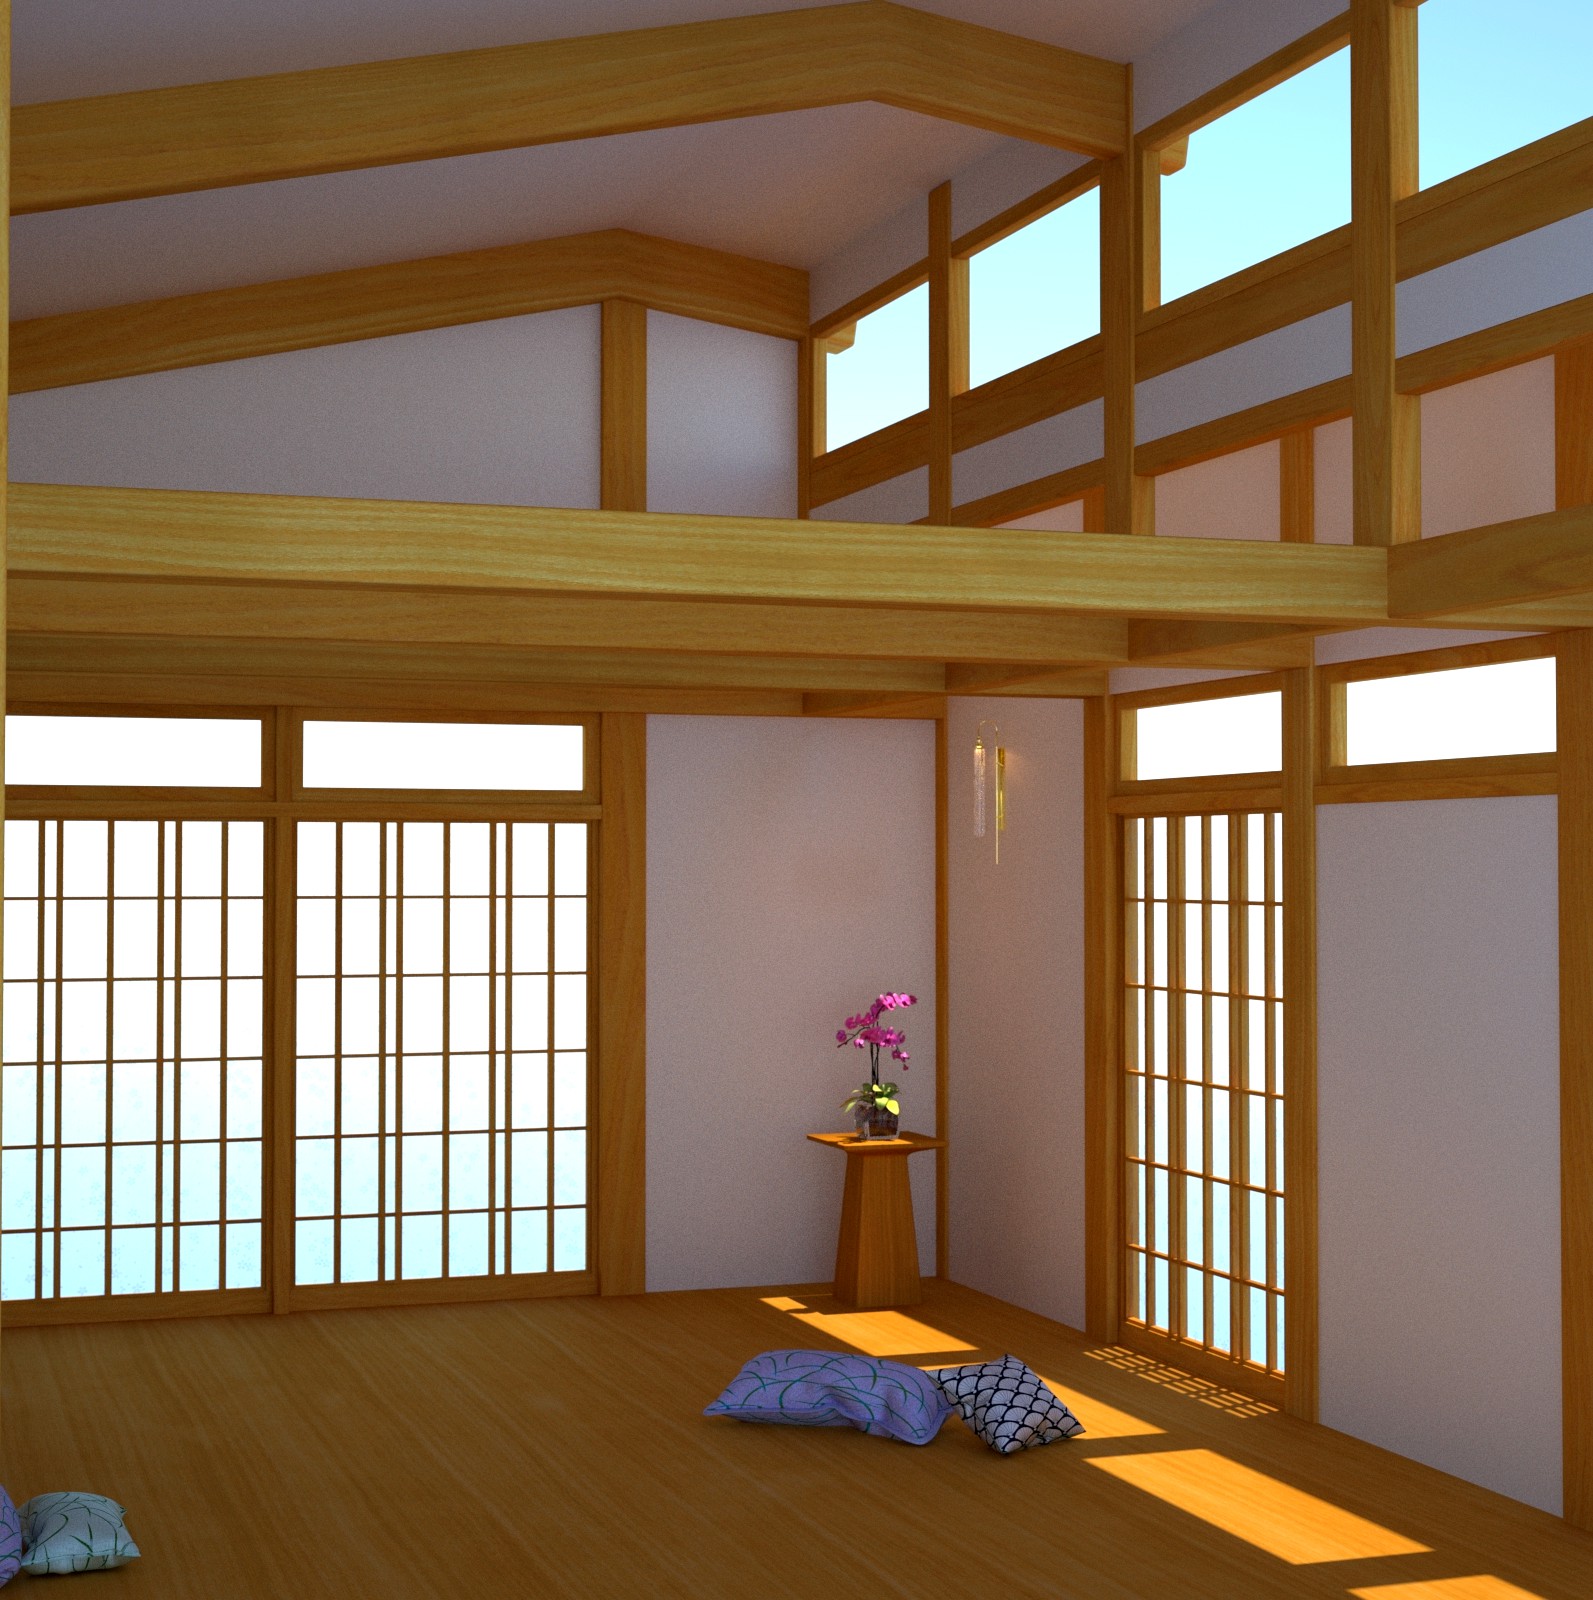 Timberframe Meditation Room - OBJ